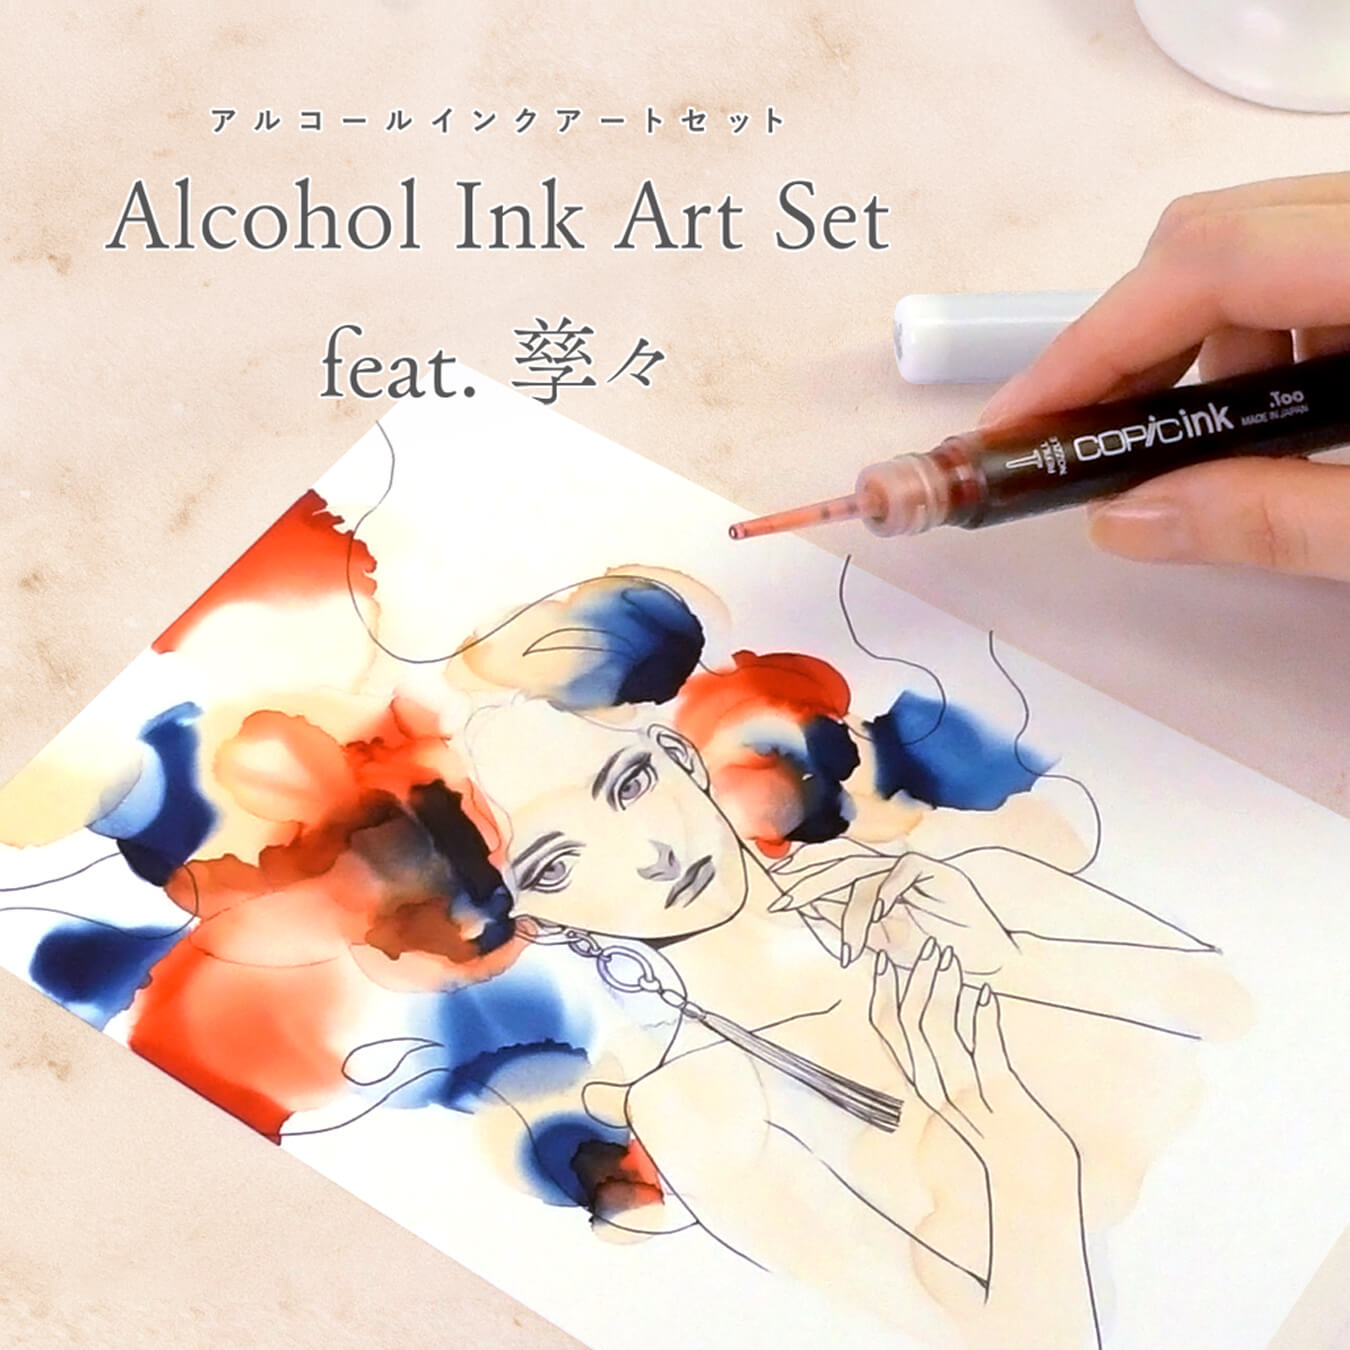 Alcohol Ink Art Set feat. 孳々